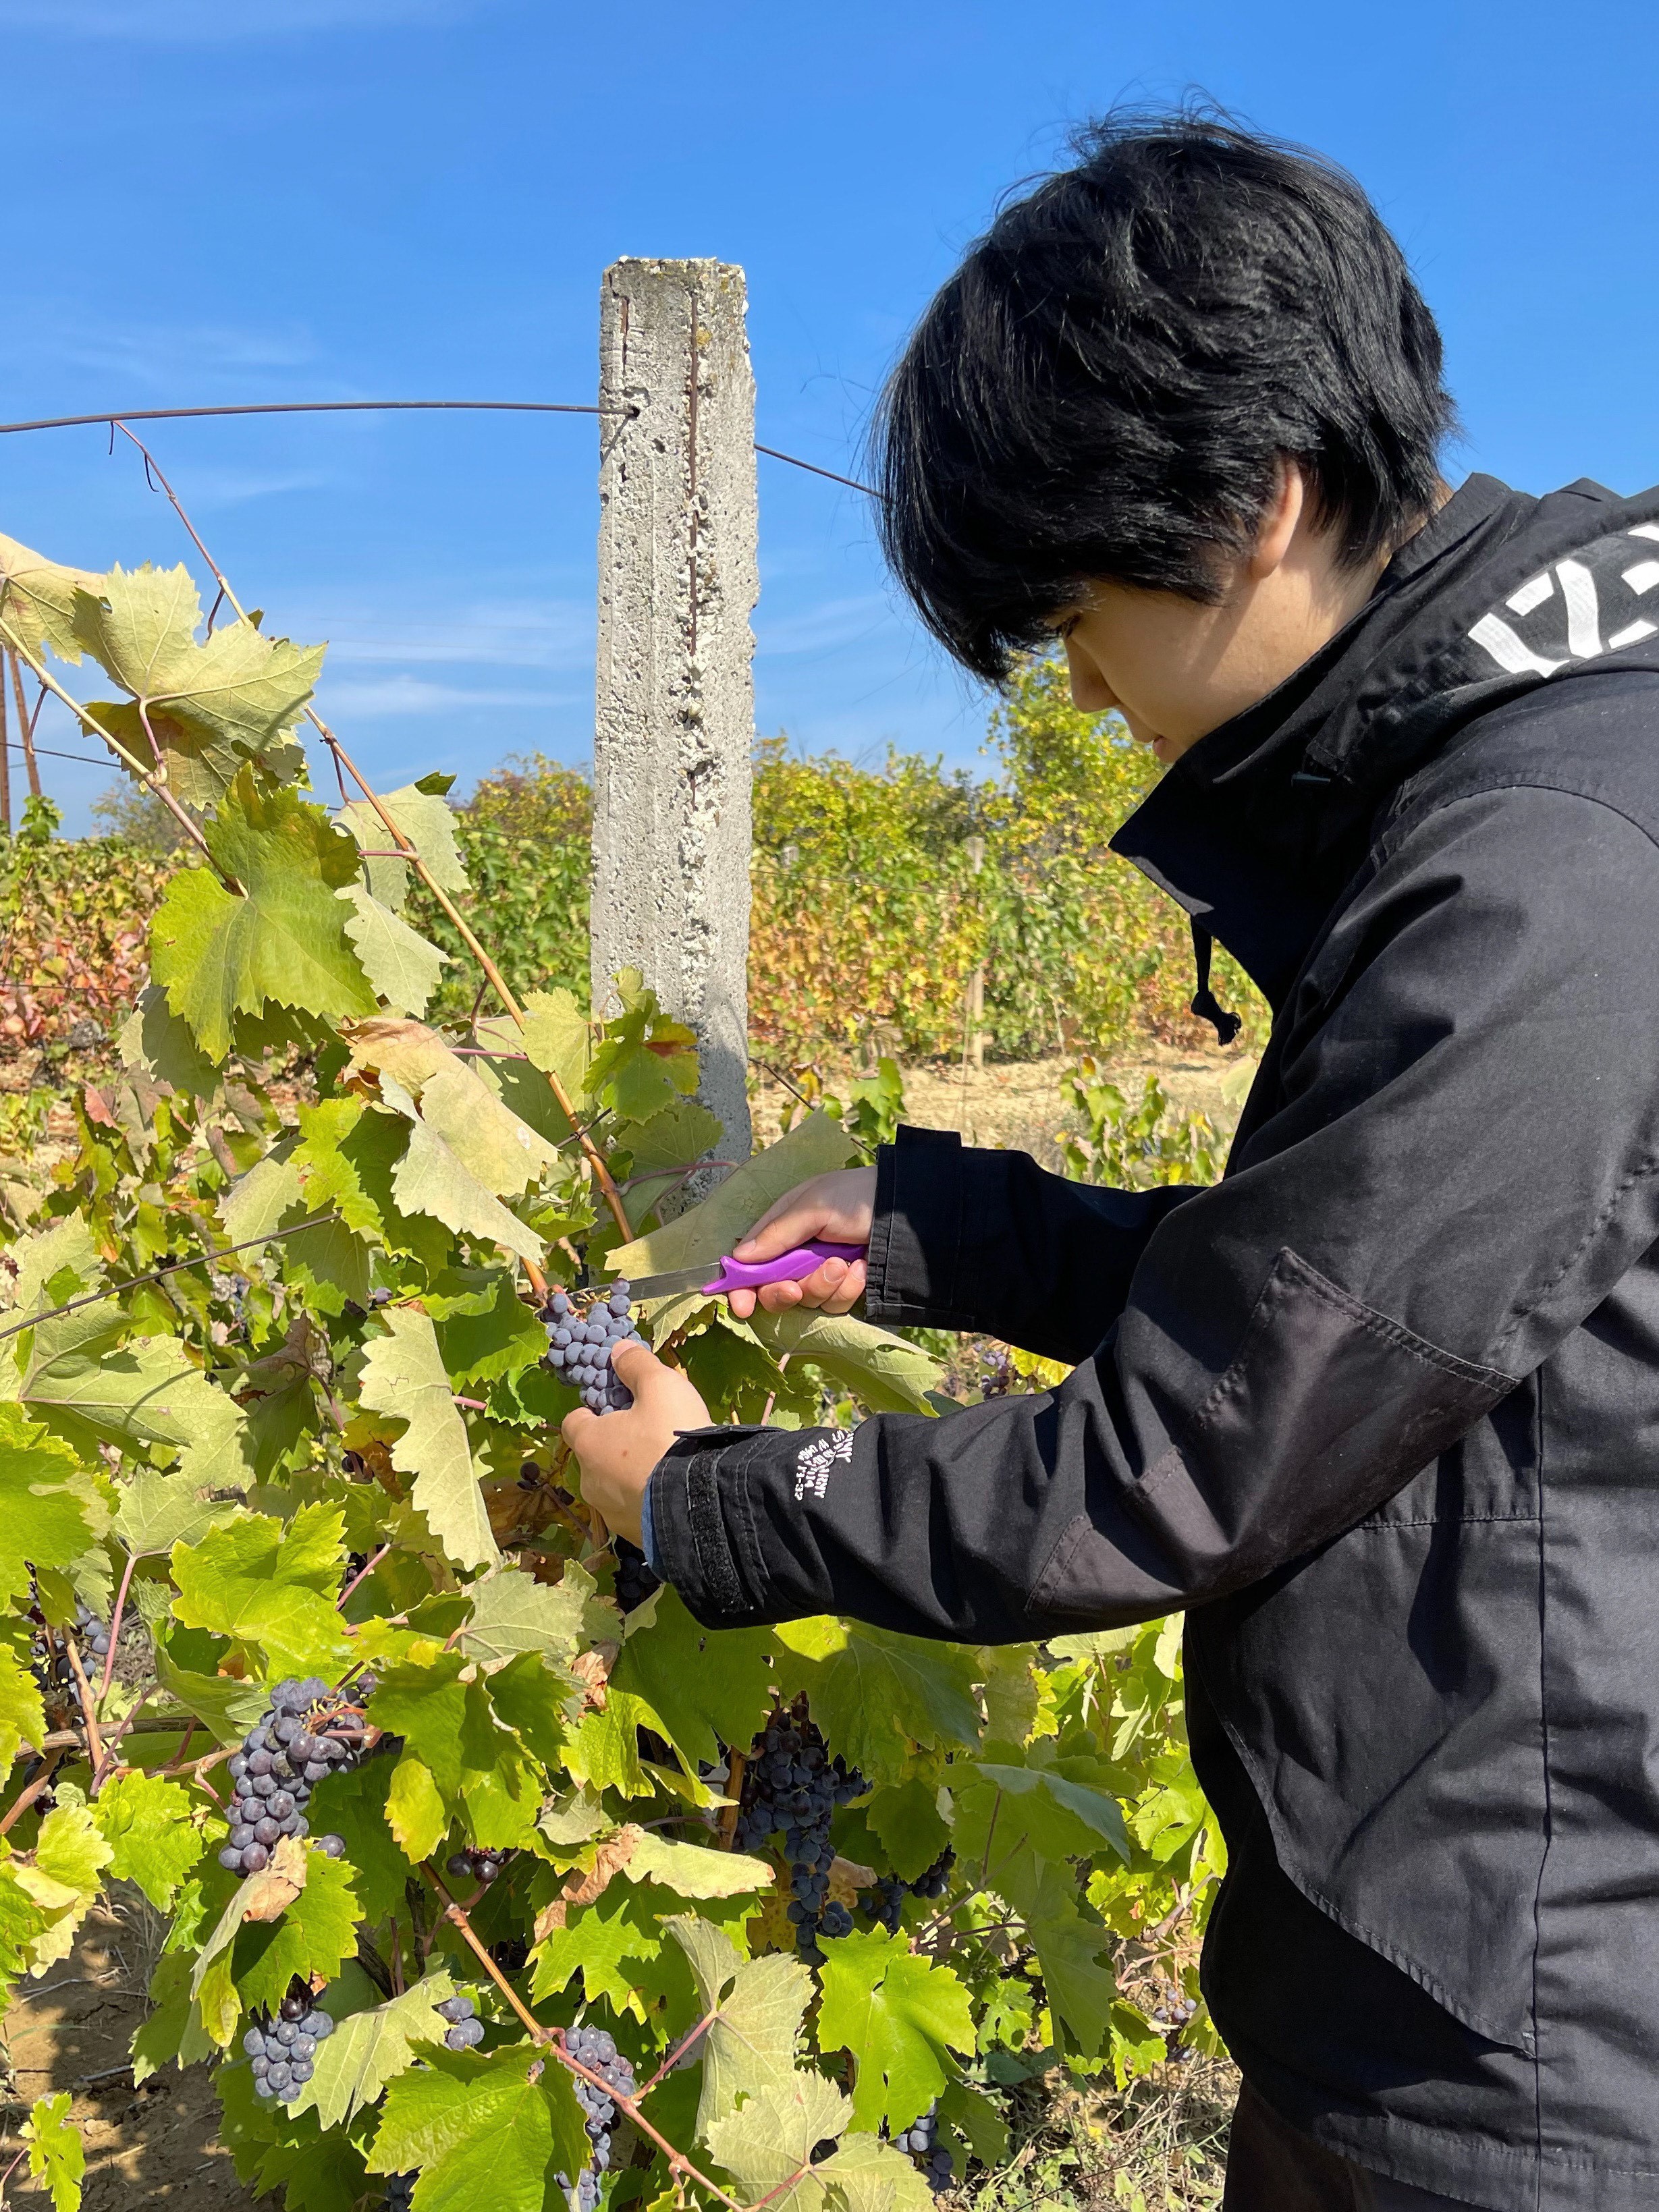 Matthew picking grapes off a vine